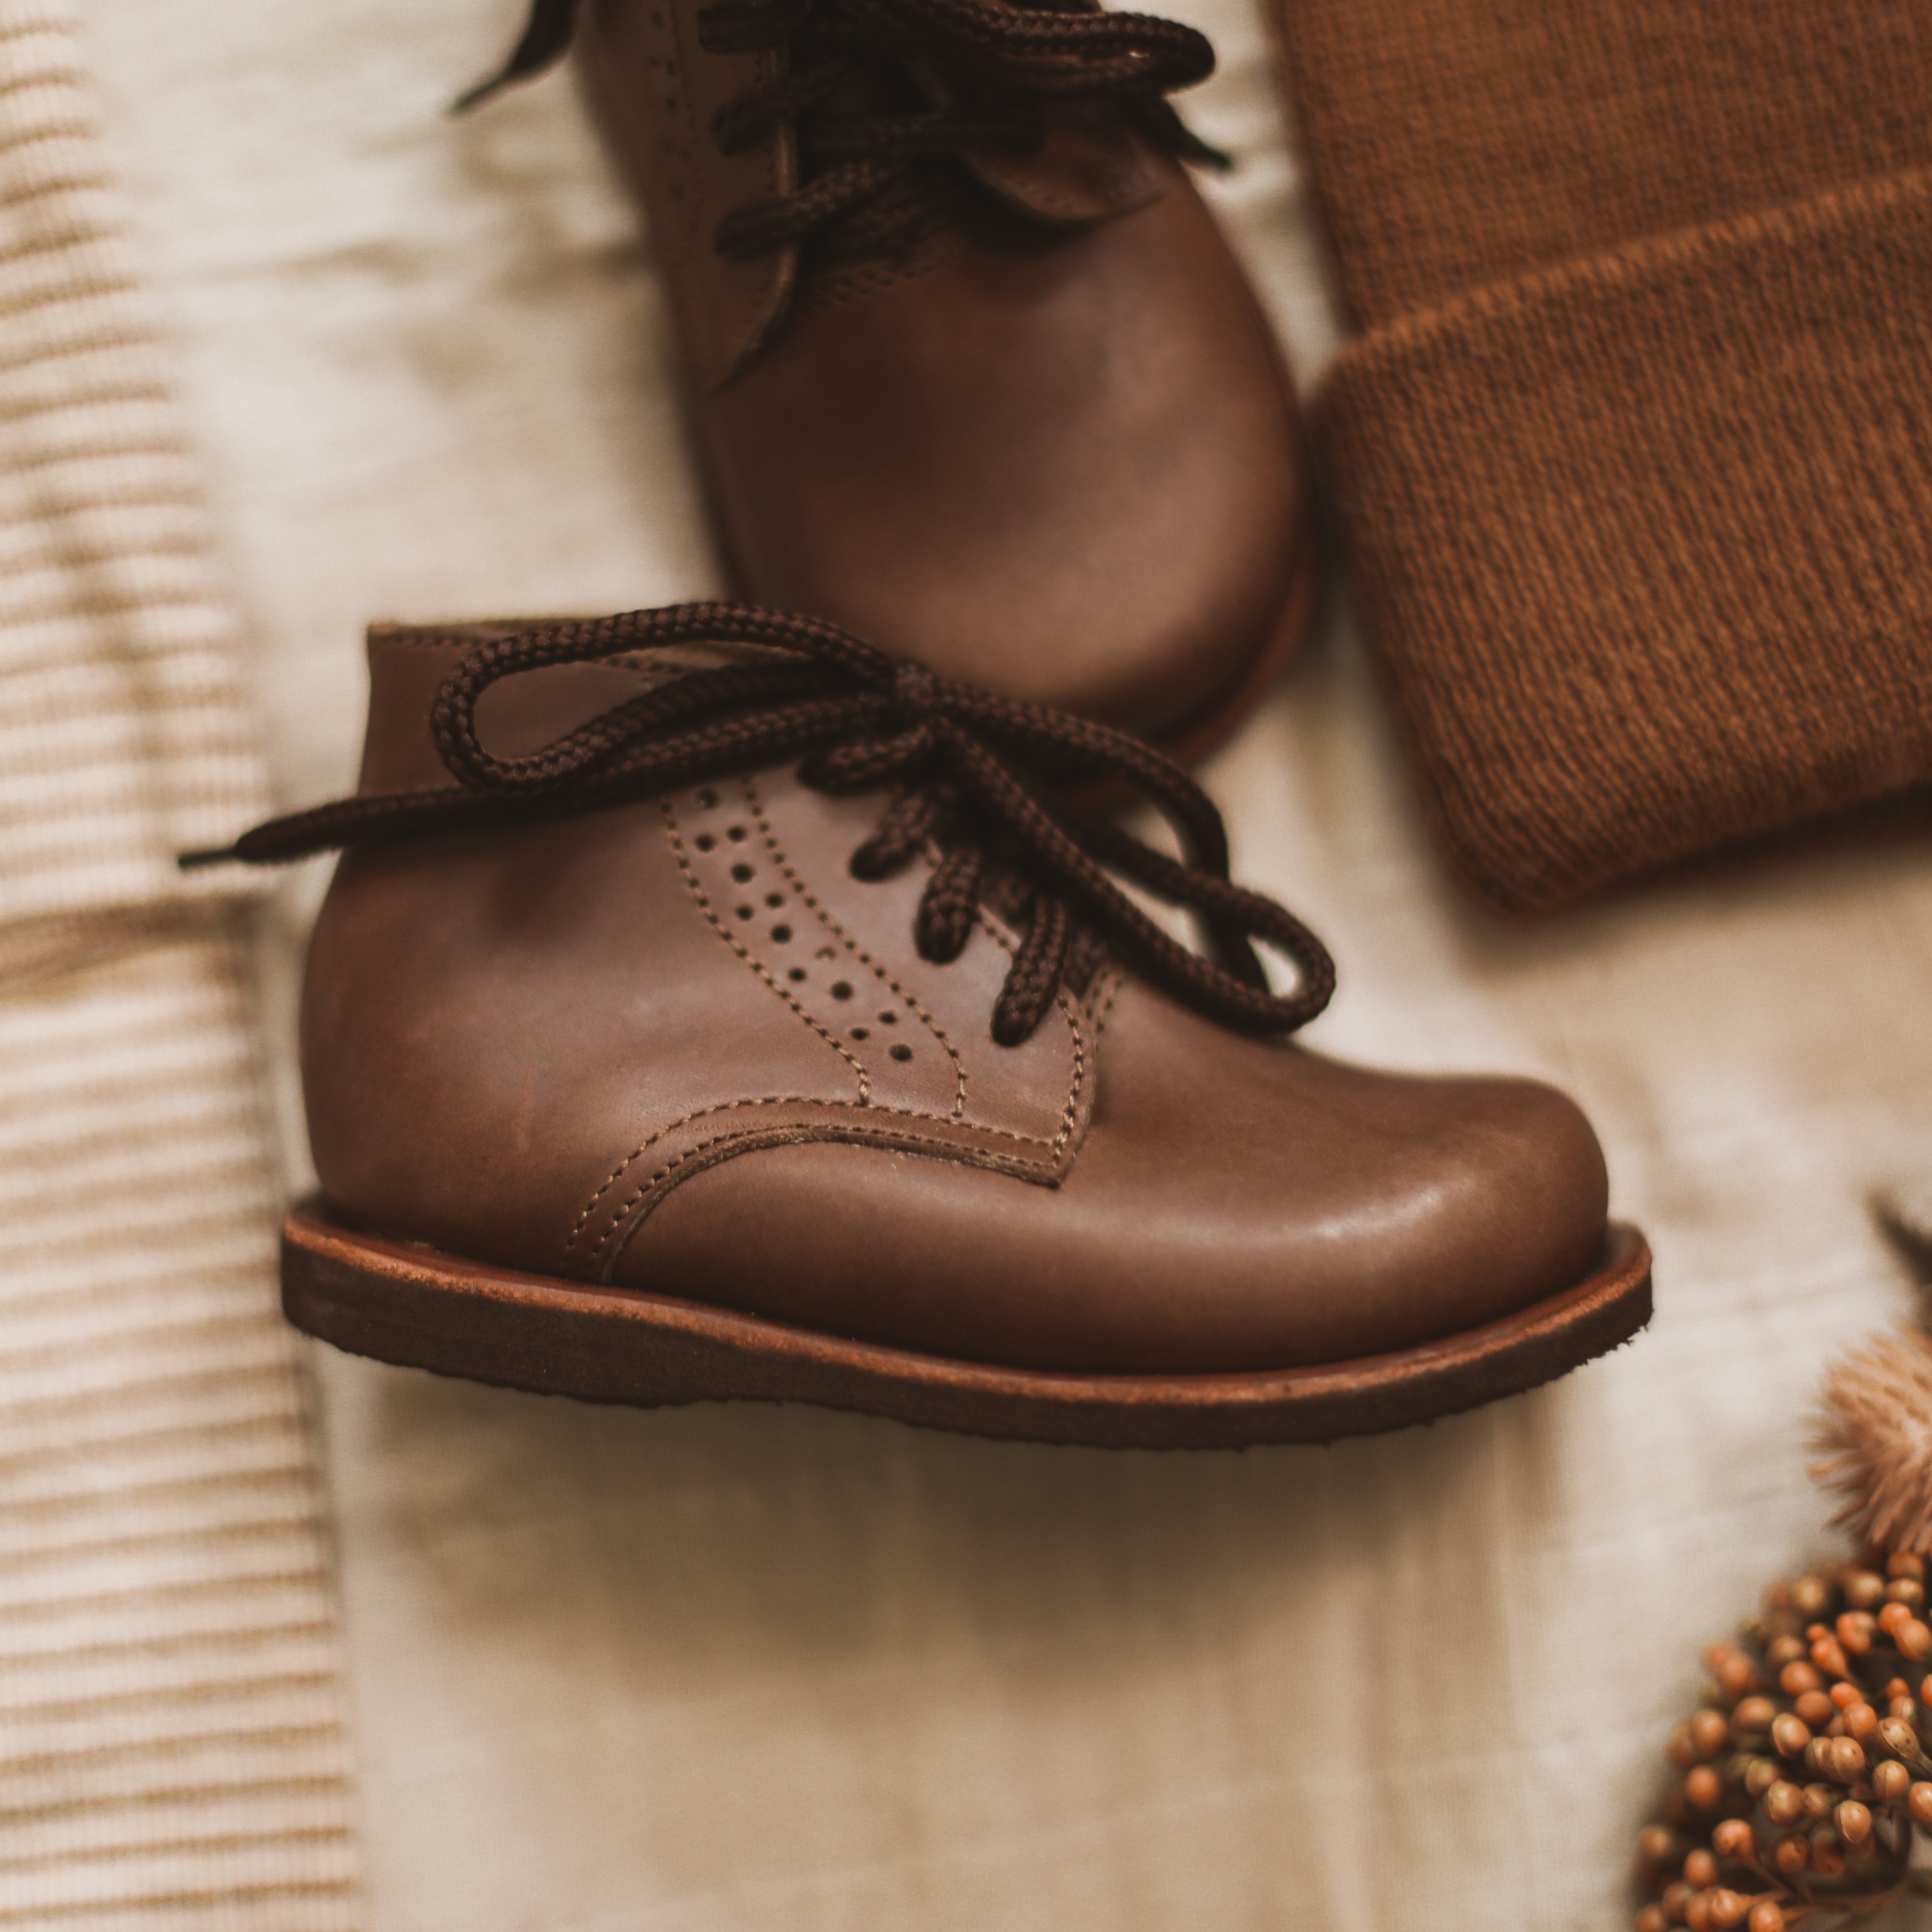 Dark brown leather boots for children. Unisex style.